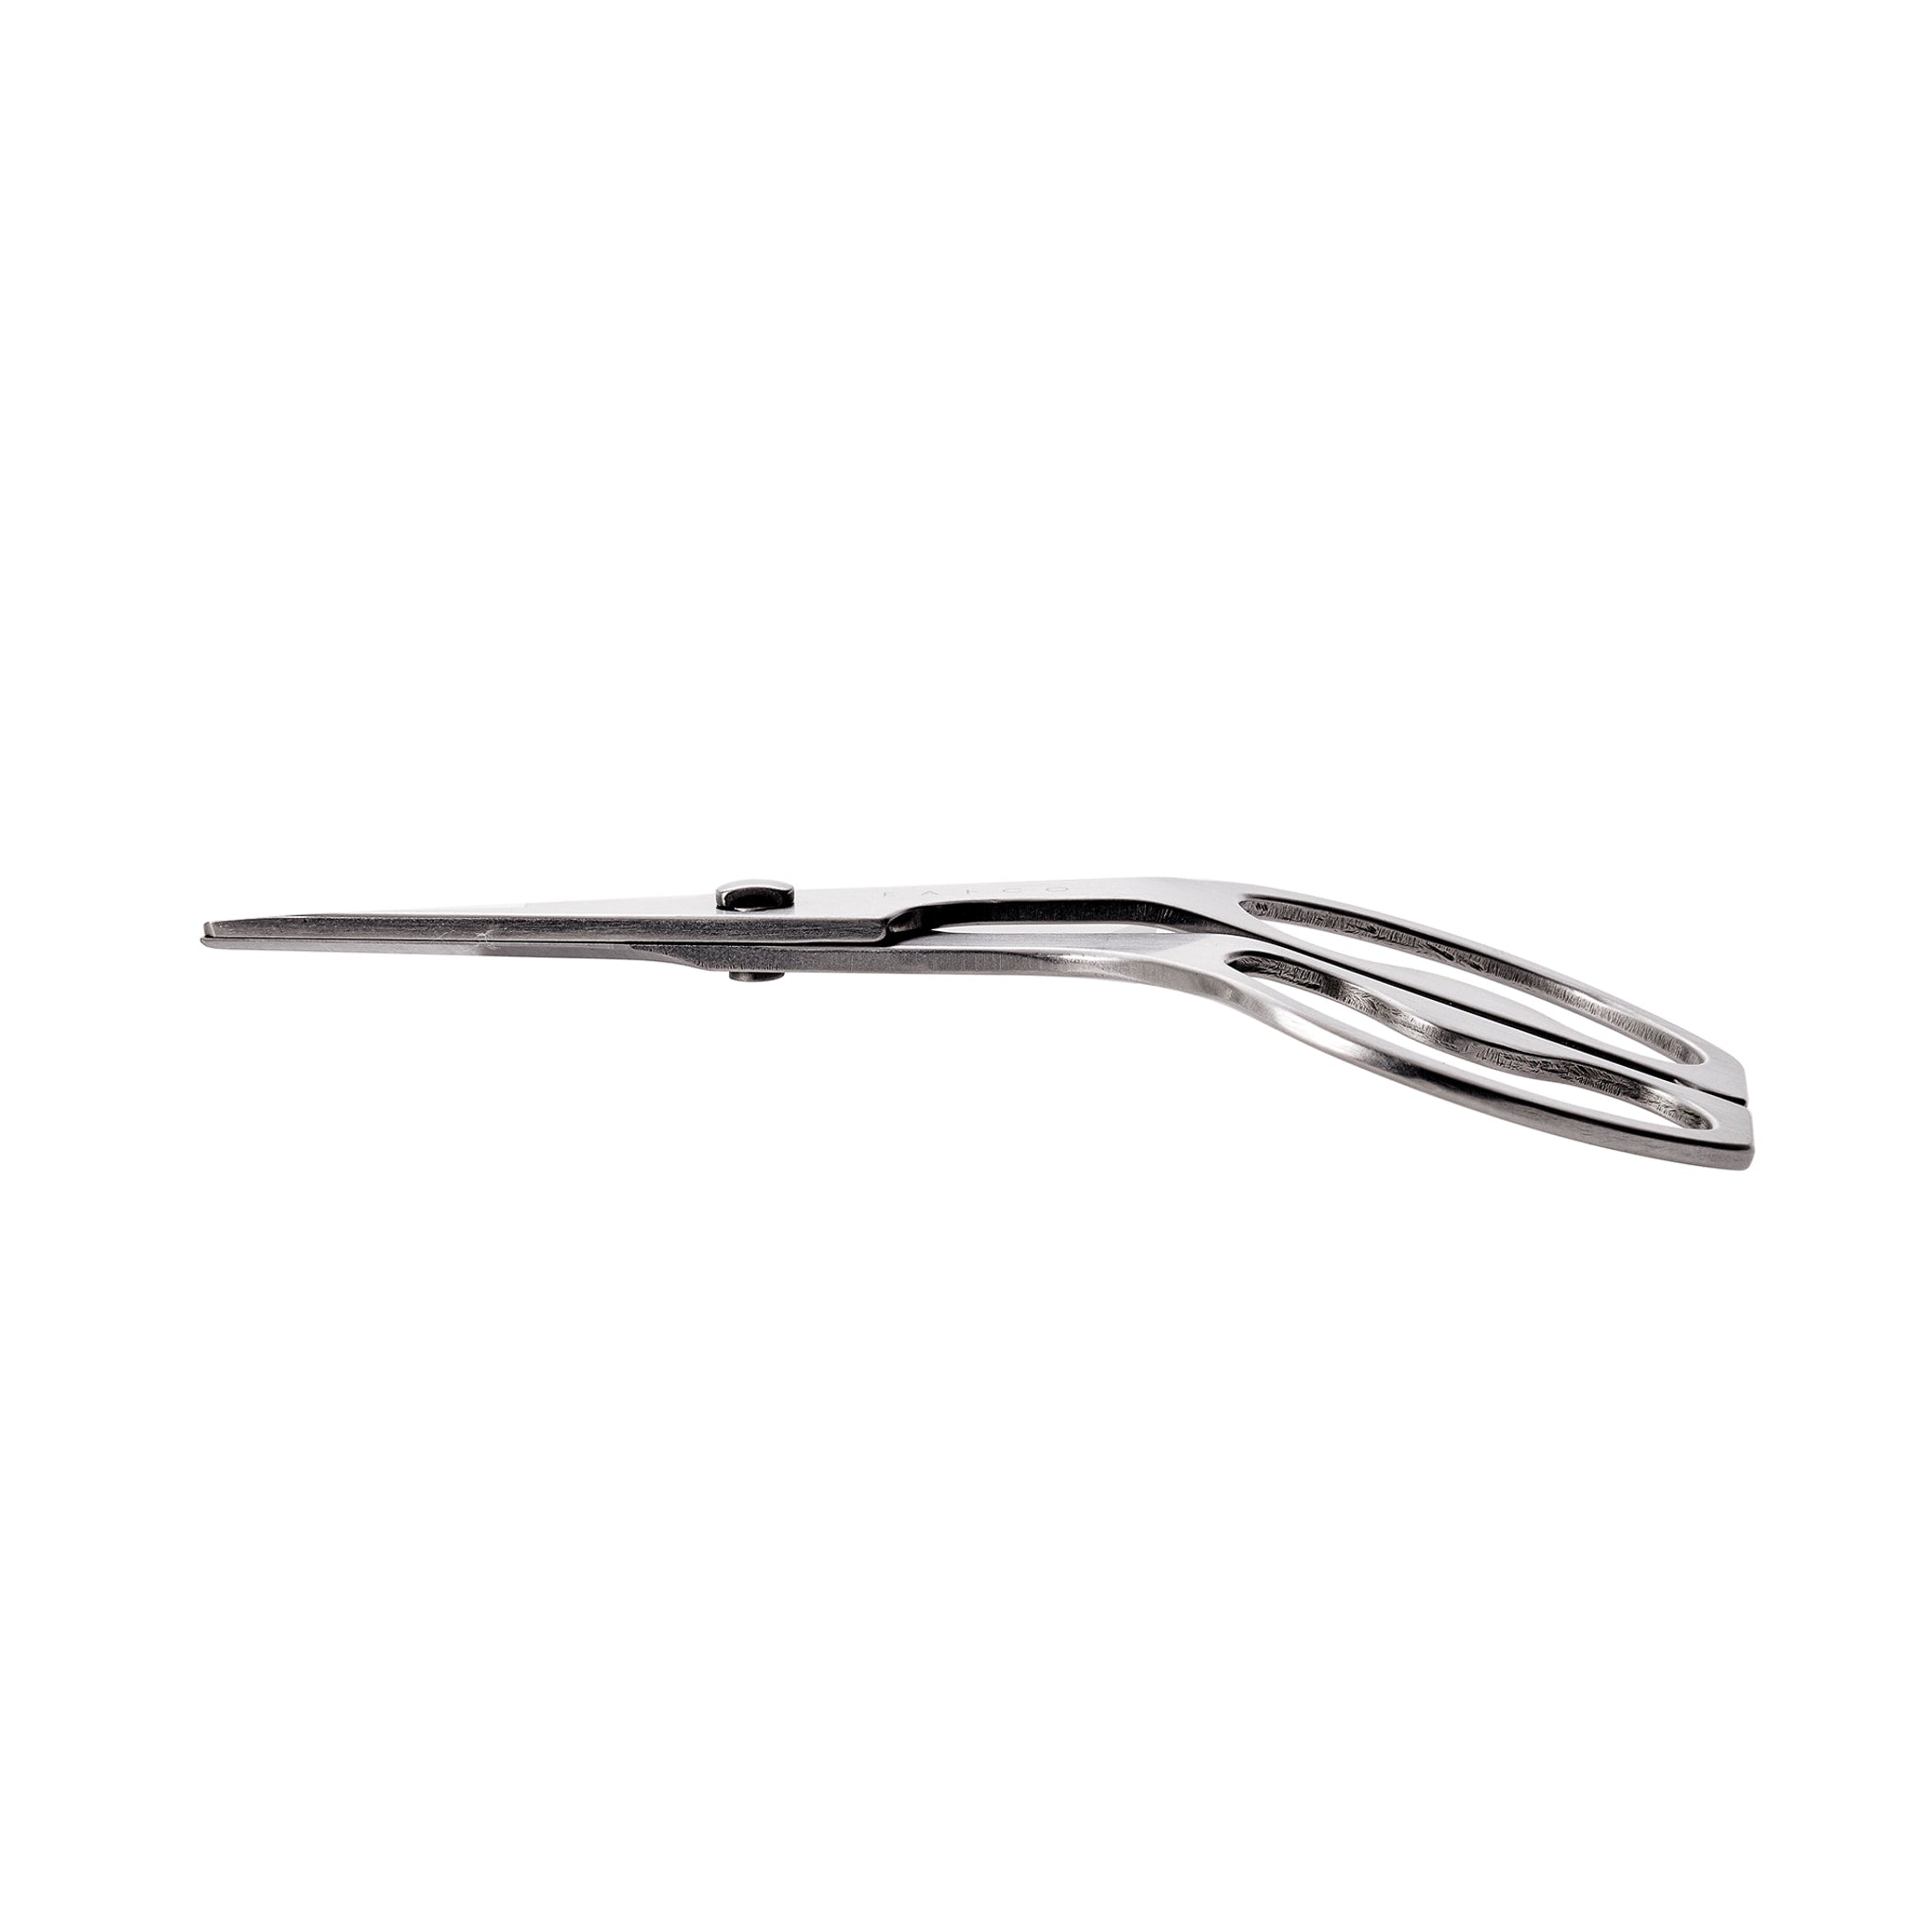 Japanese Stainless Steel Take-Apart Kitchen Scissors